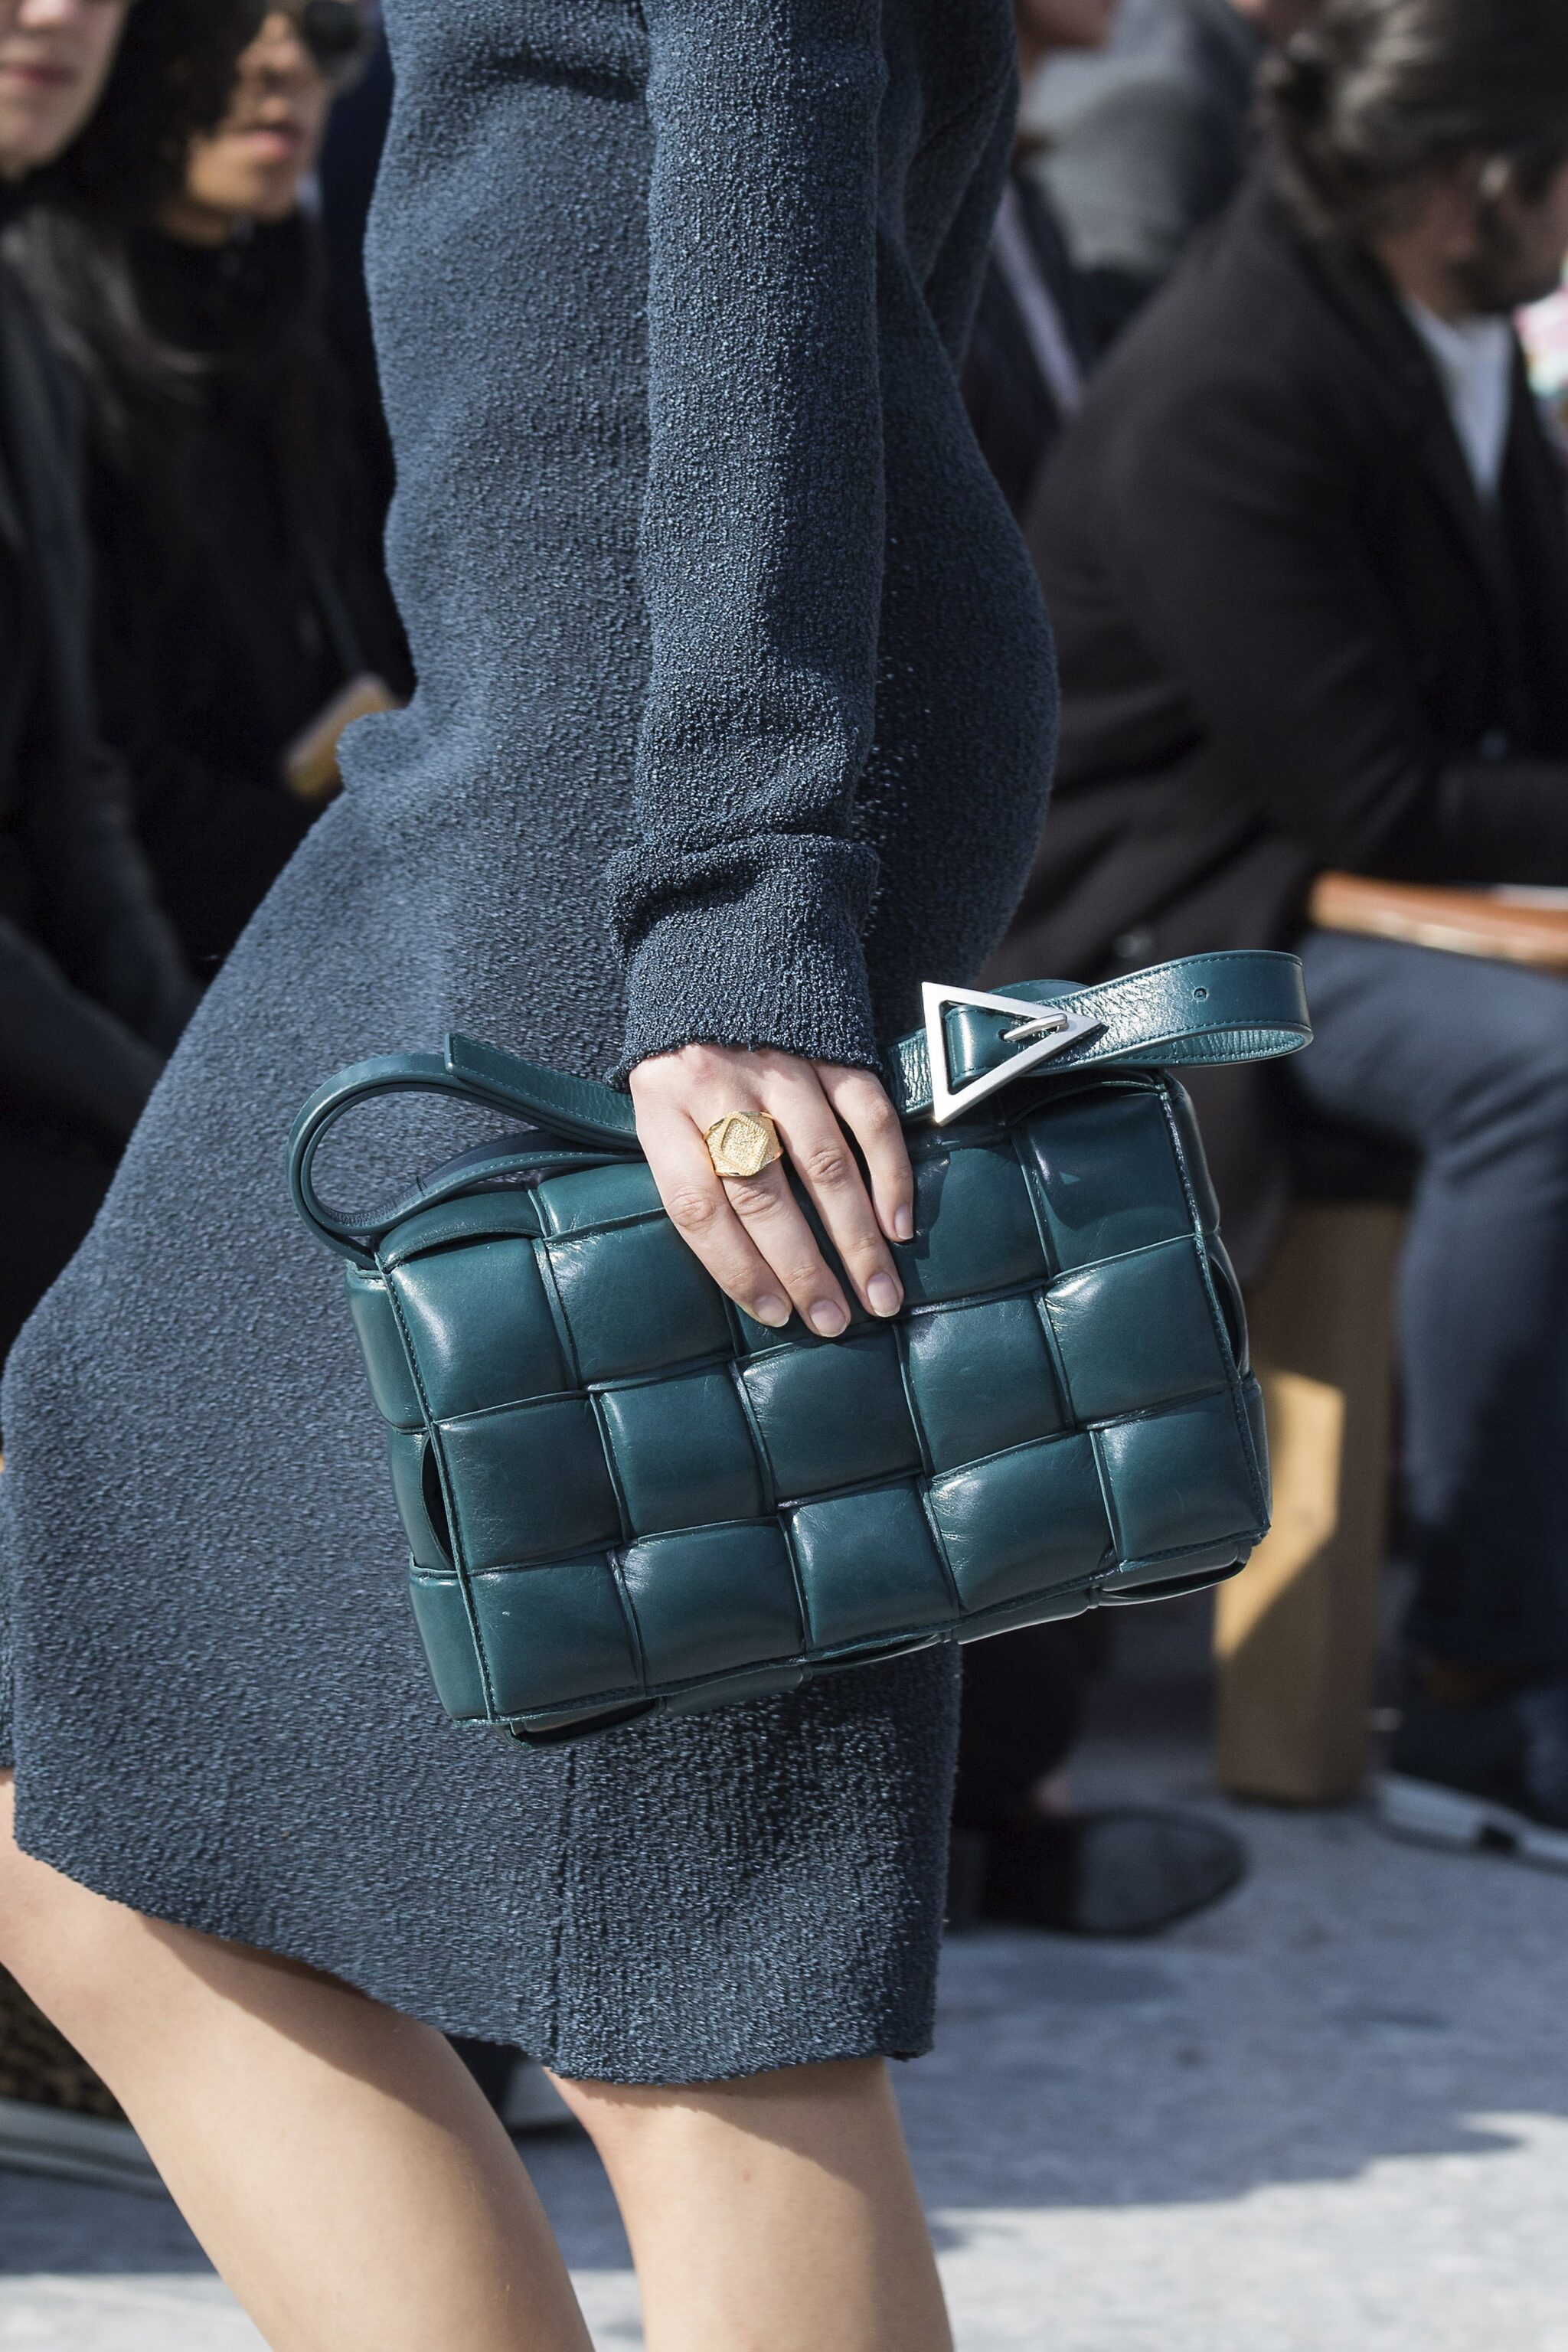 4 Reasons Why Bottega Veneta Will Be the It Brand of 2019